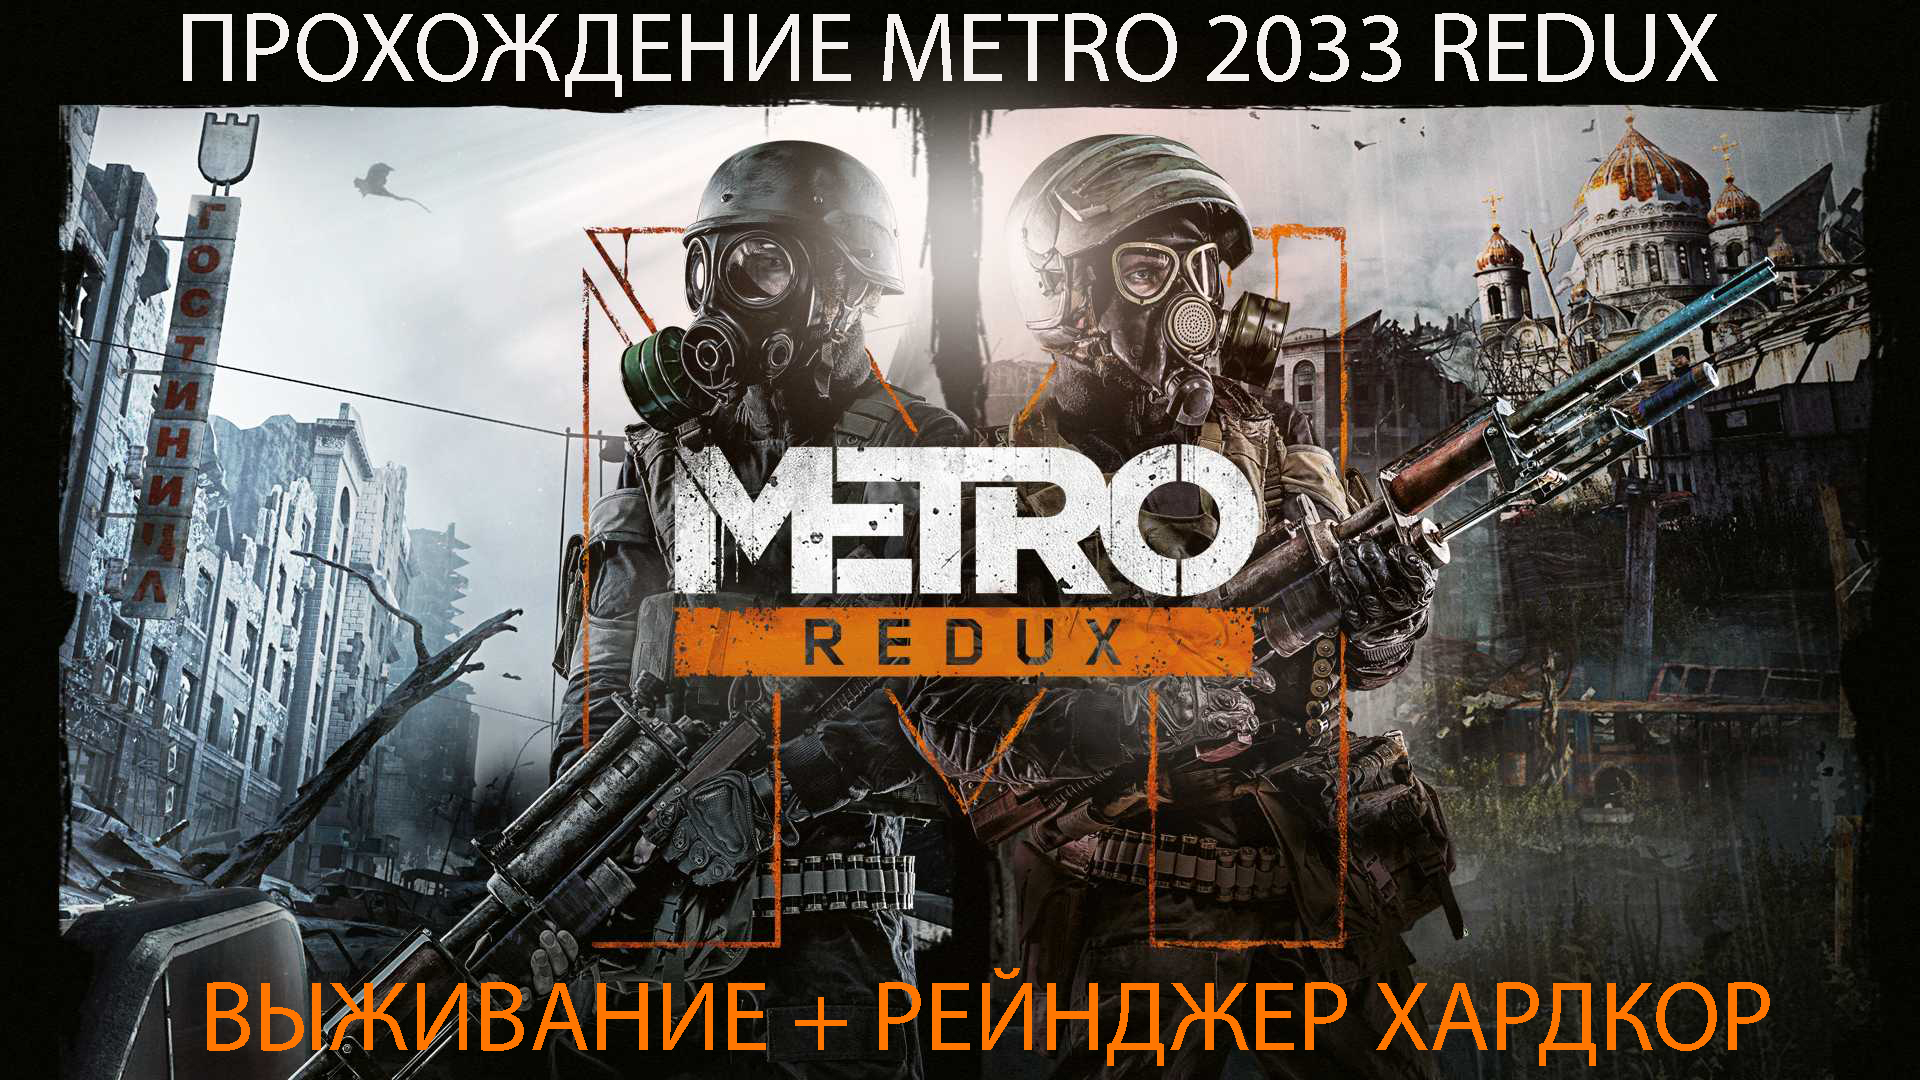 Прохождение Metro 2033 Redux III - Рейнджер Хардкор.mp4